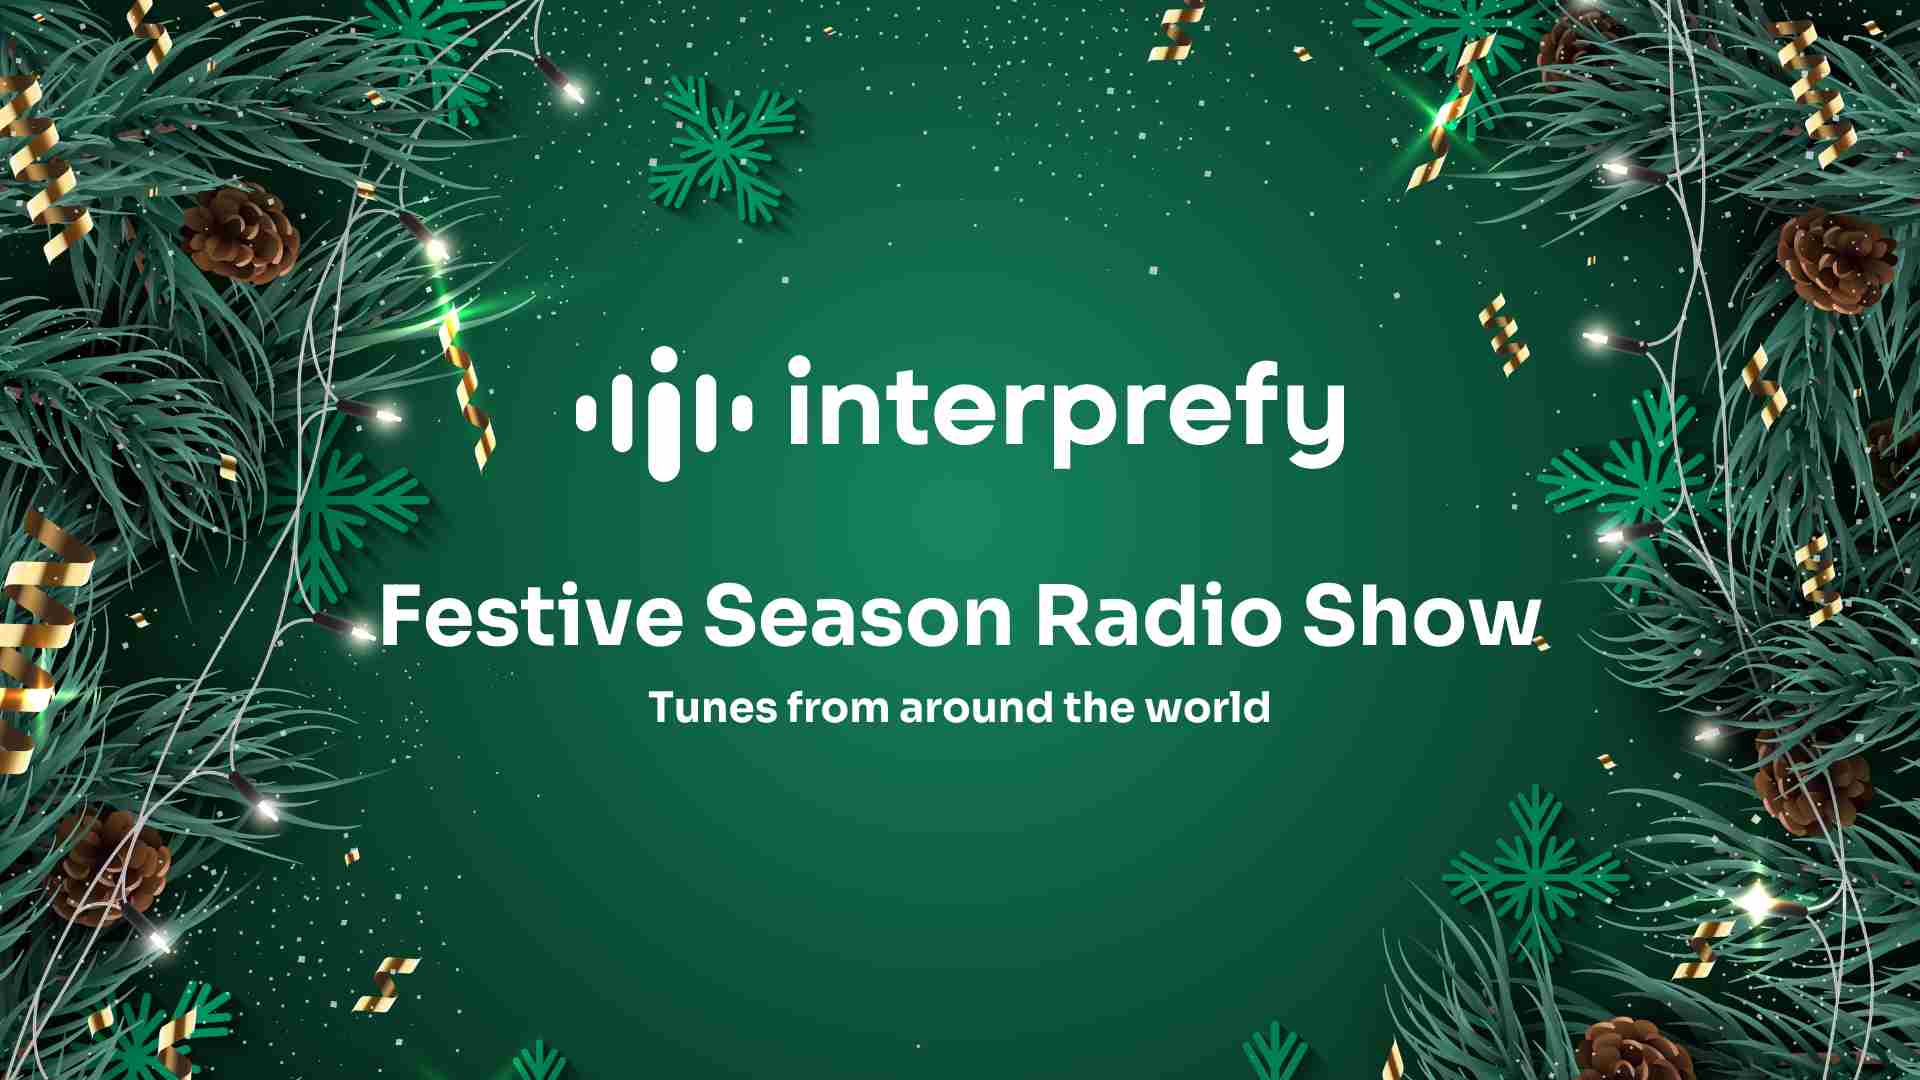 Festive Season Radio Show | Interprefy